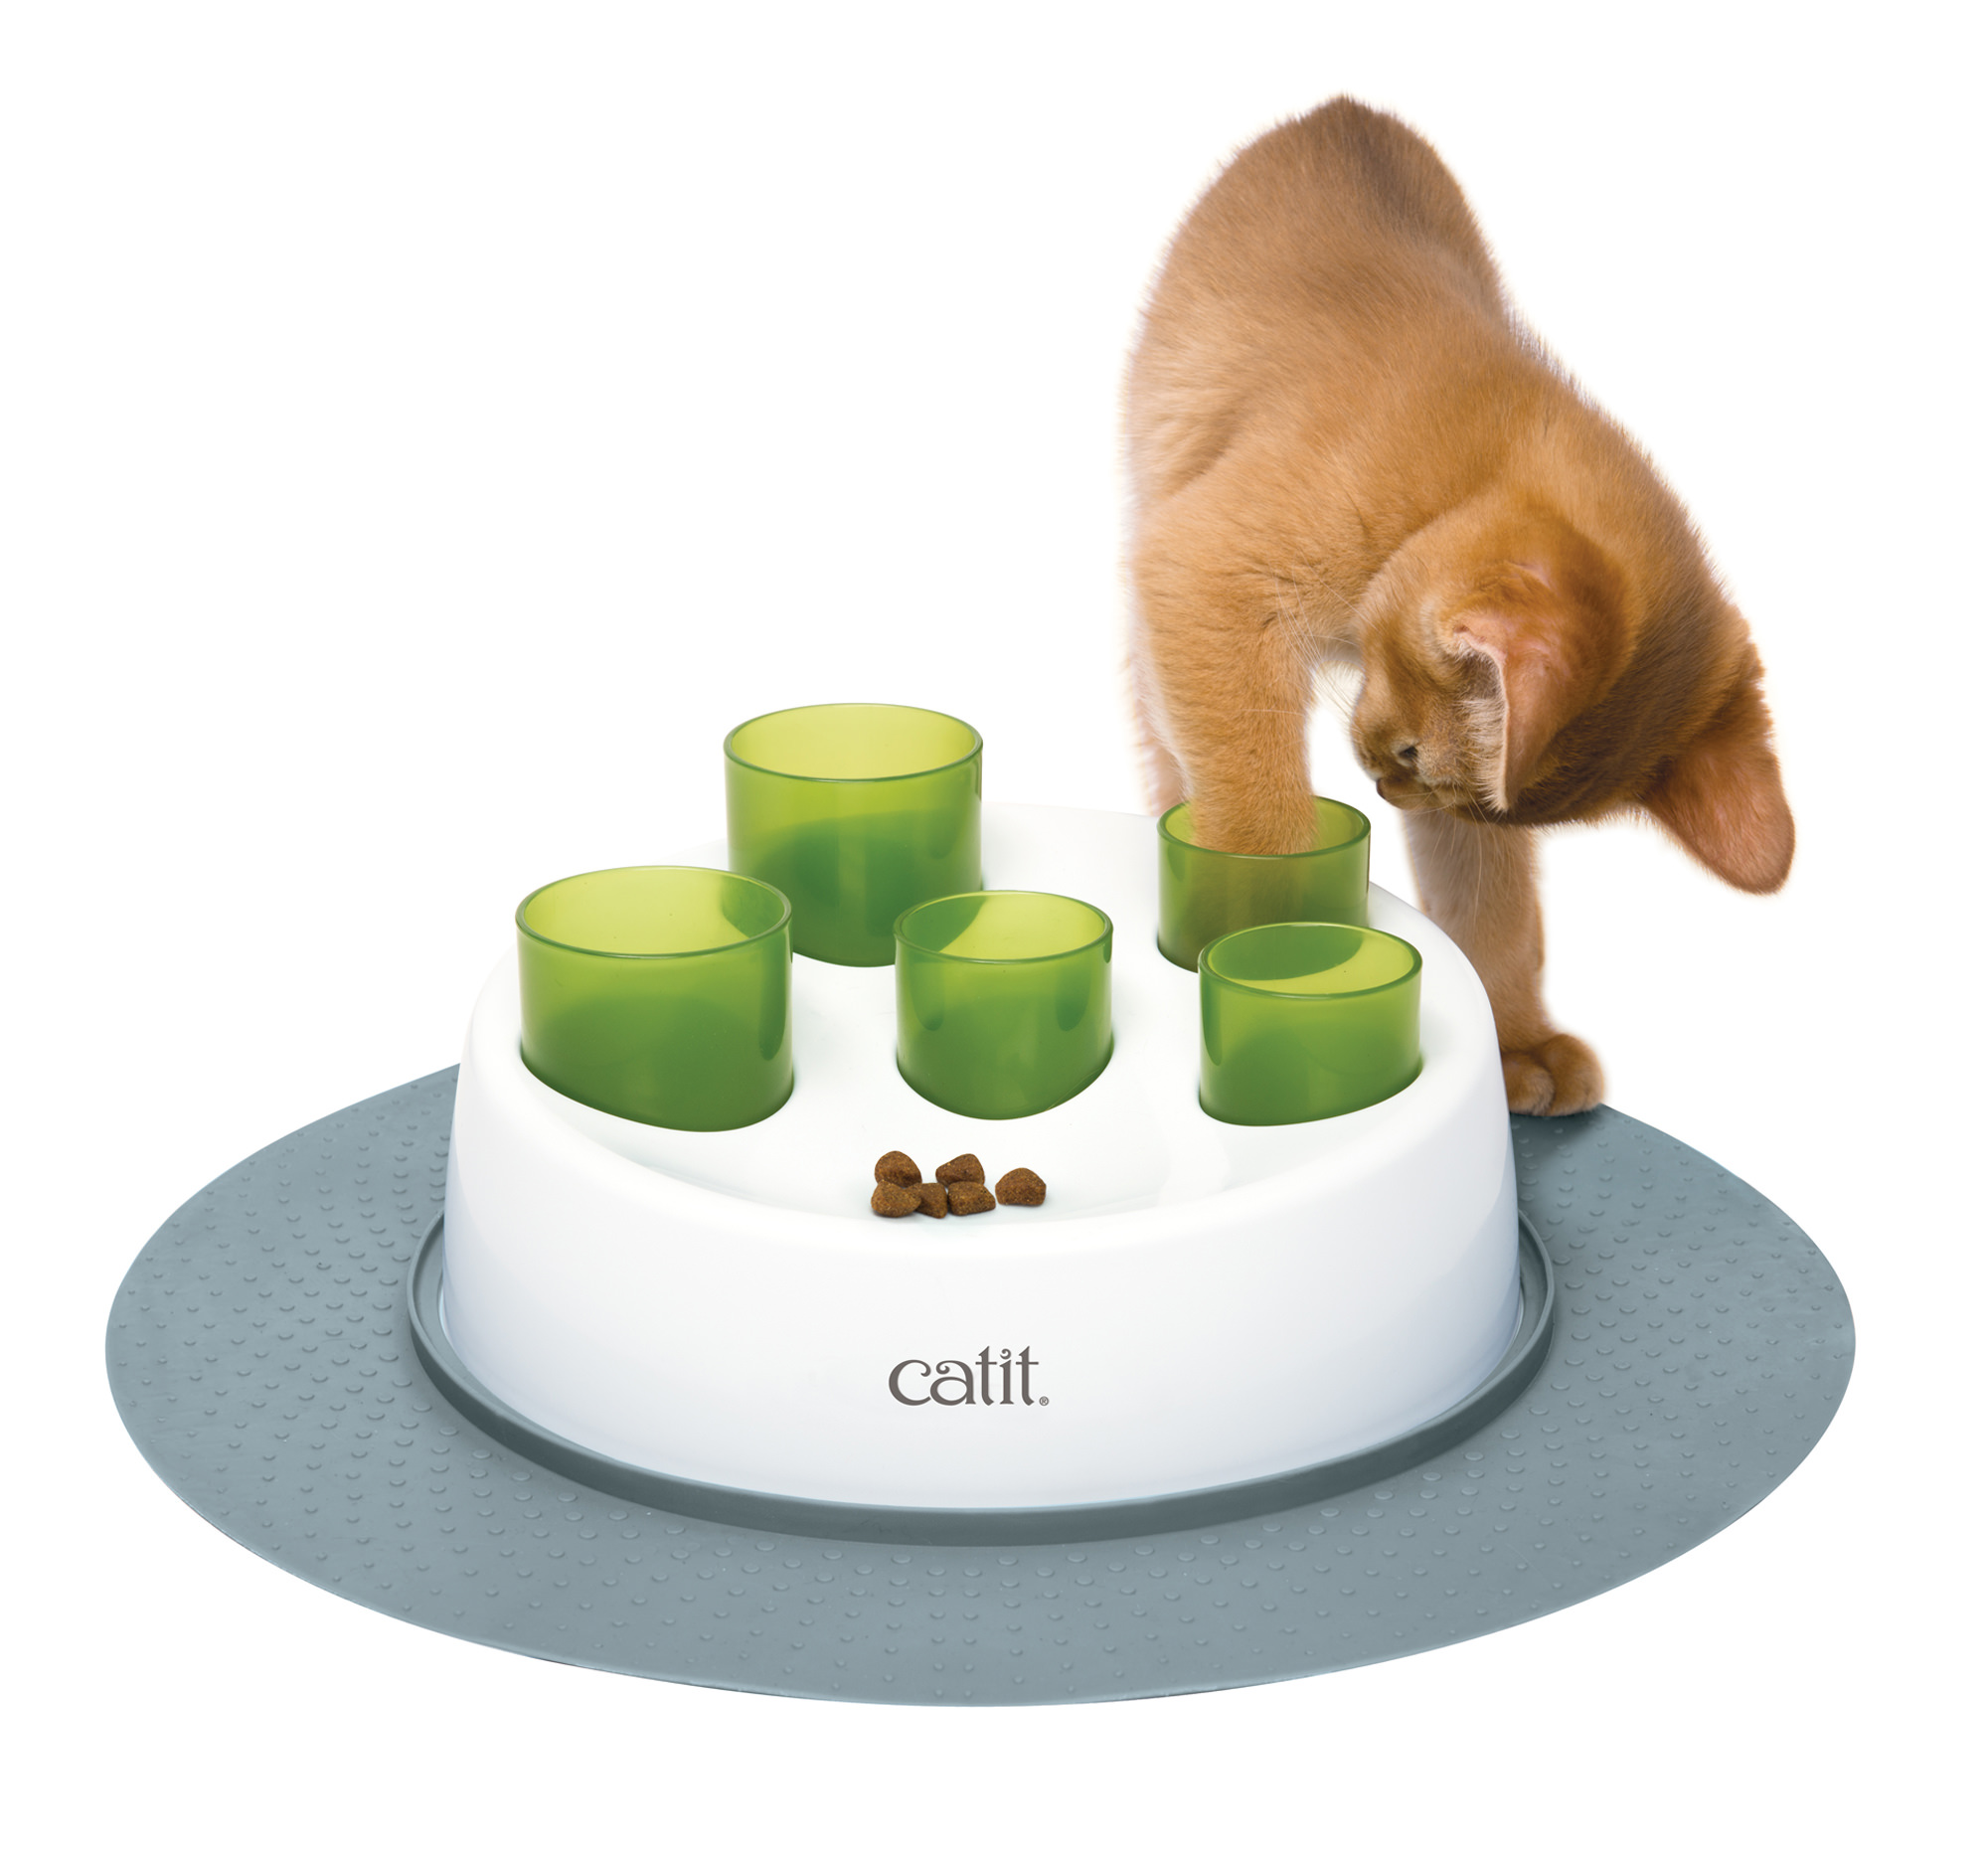 Catit Senses 2.0 Digger Interactive Cat Treat Toy - image 2 of 5